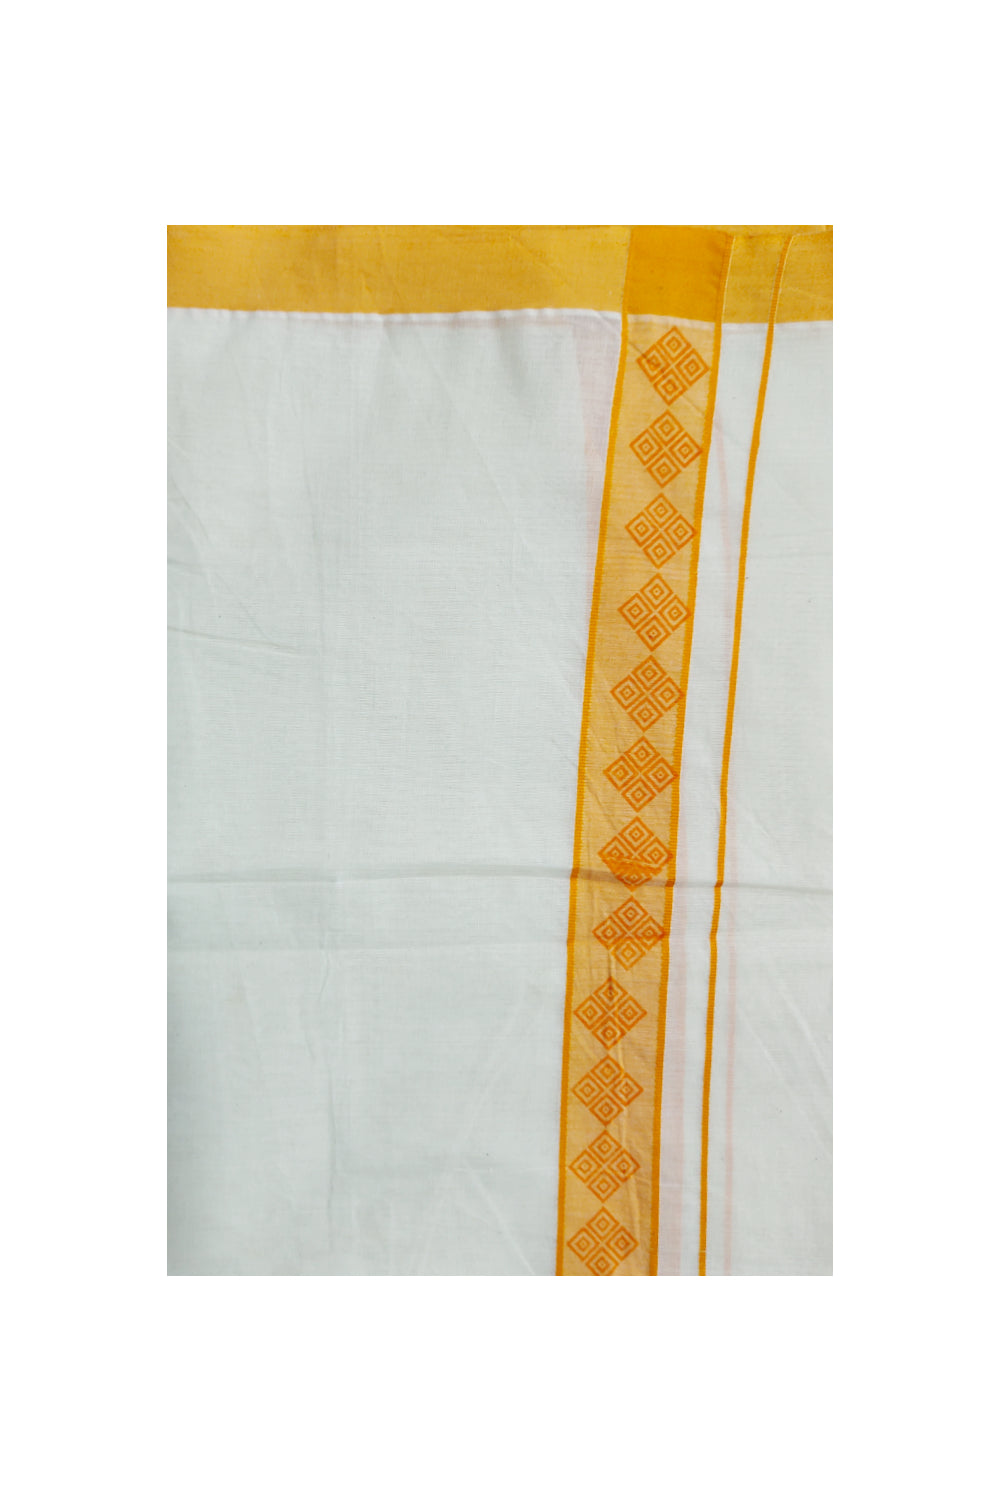 Off White Cotton Mundu with Orange Woven Kara (South Indian Dhoti)